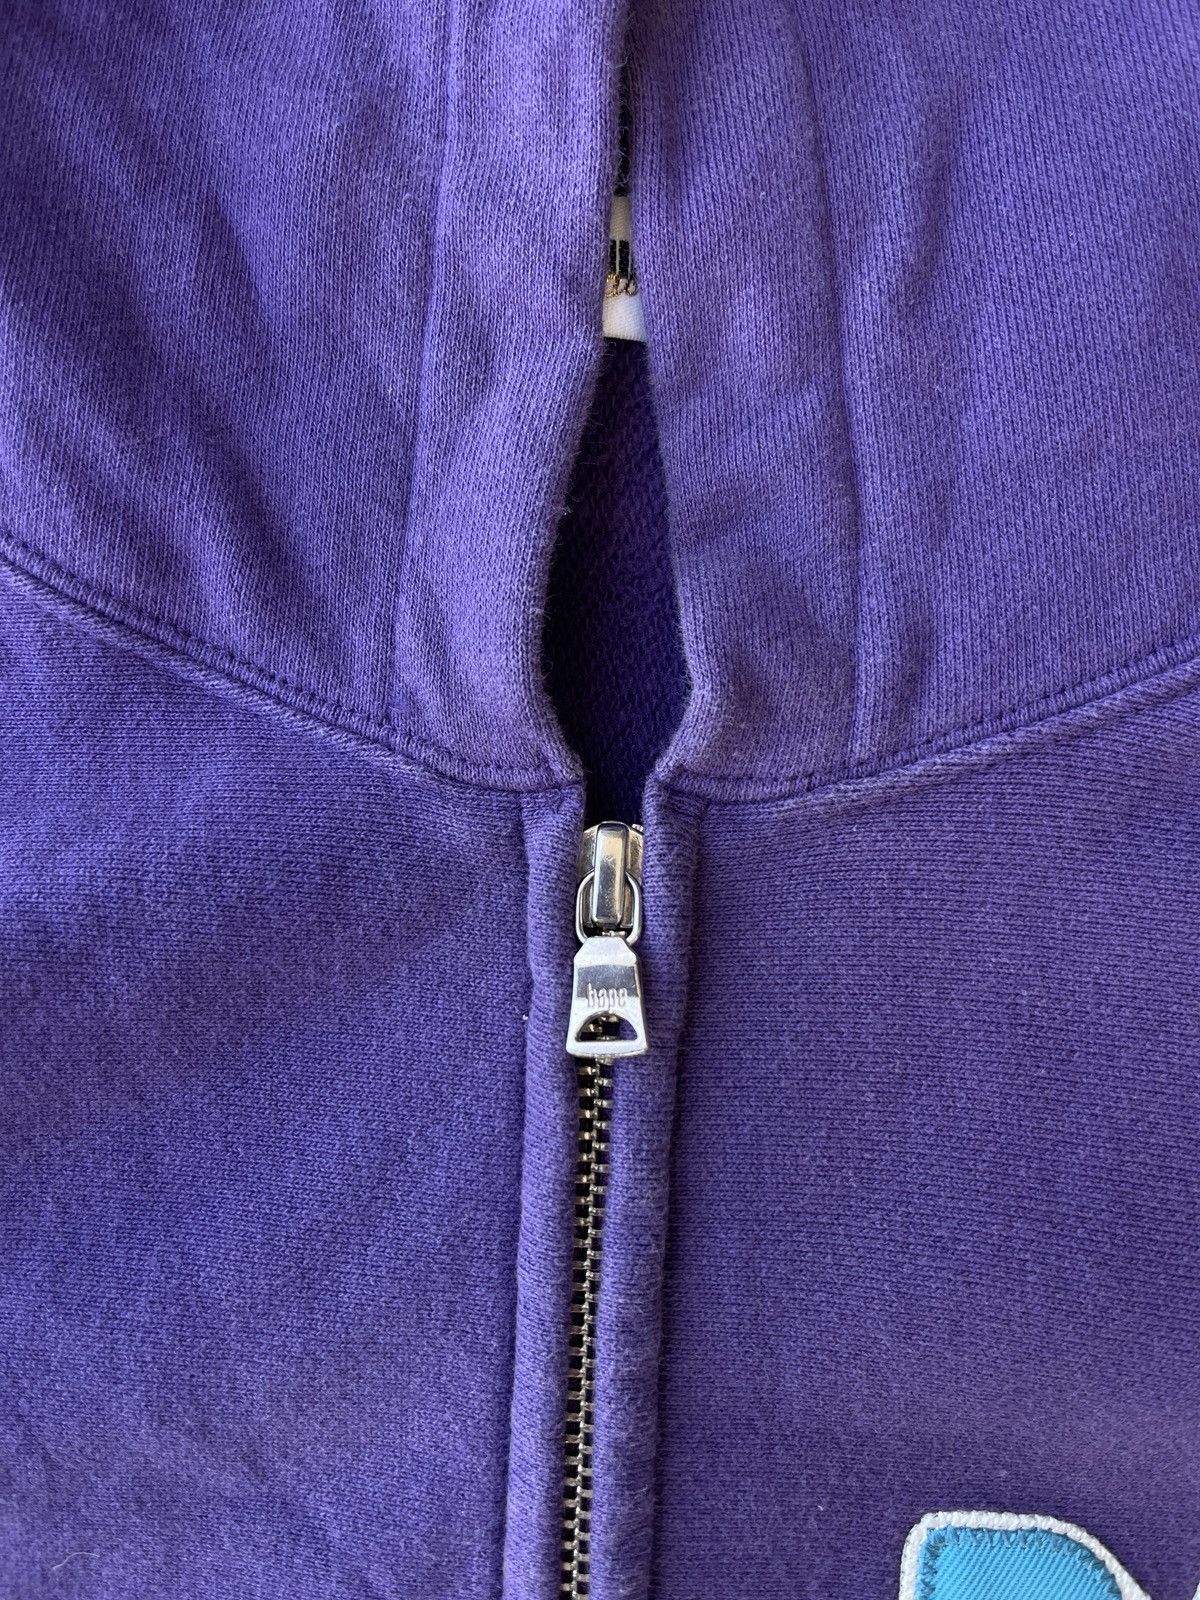 Bape Bapesta Purple Stars Zip Hoodie (M) - 5